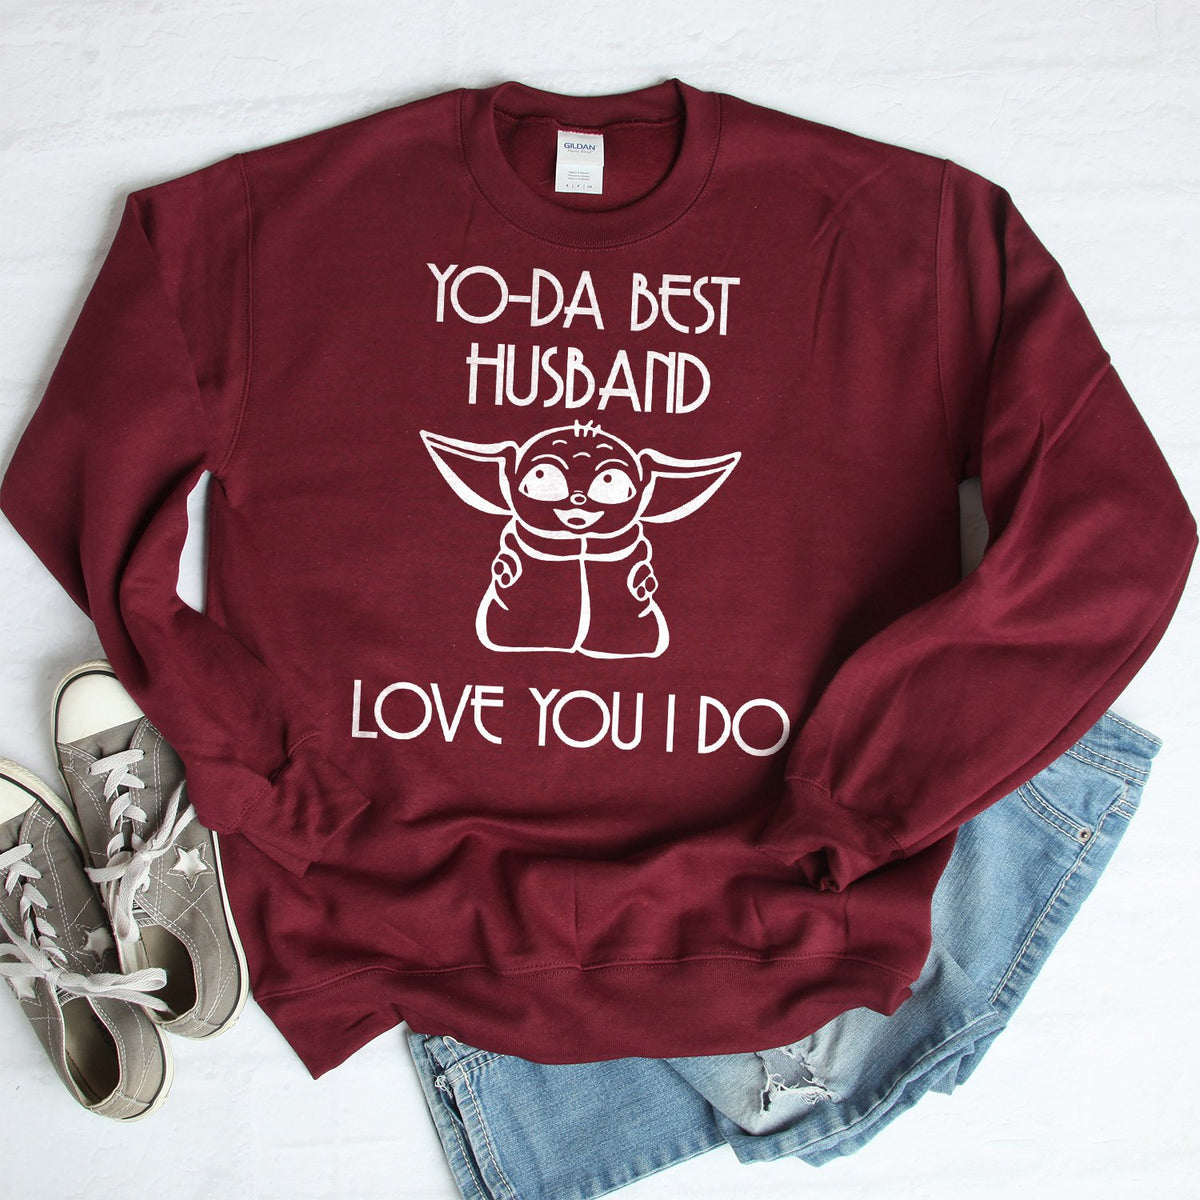 Yo-Da Best Husband Love You I Do - Long Sleeve Heavy Crewneck Sweatshirt